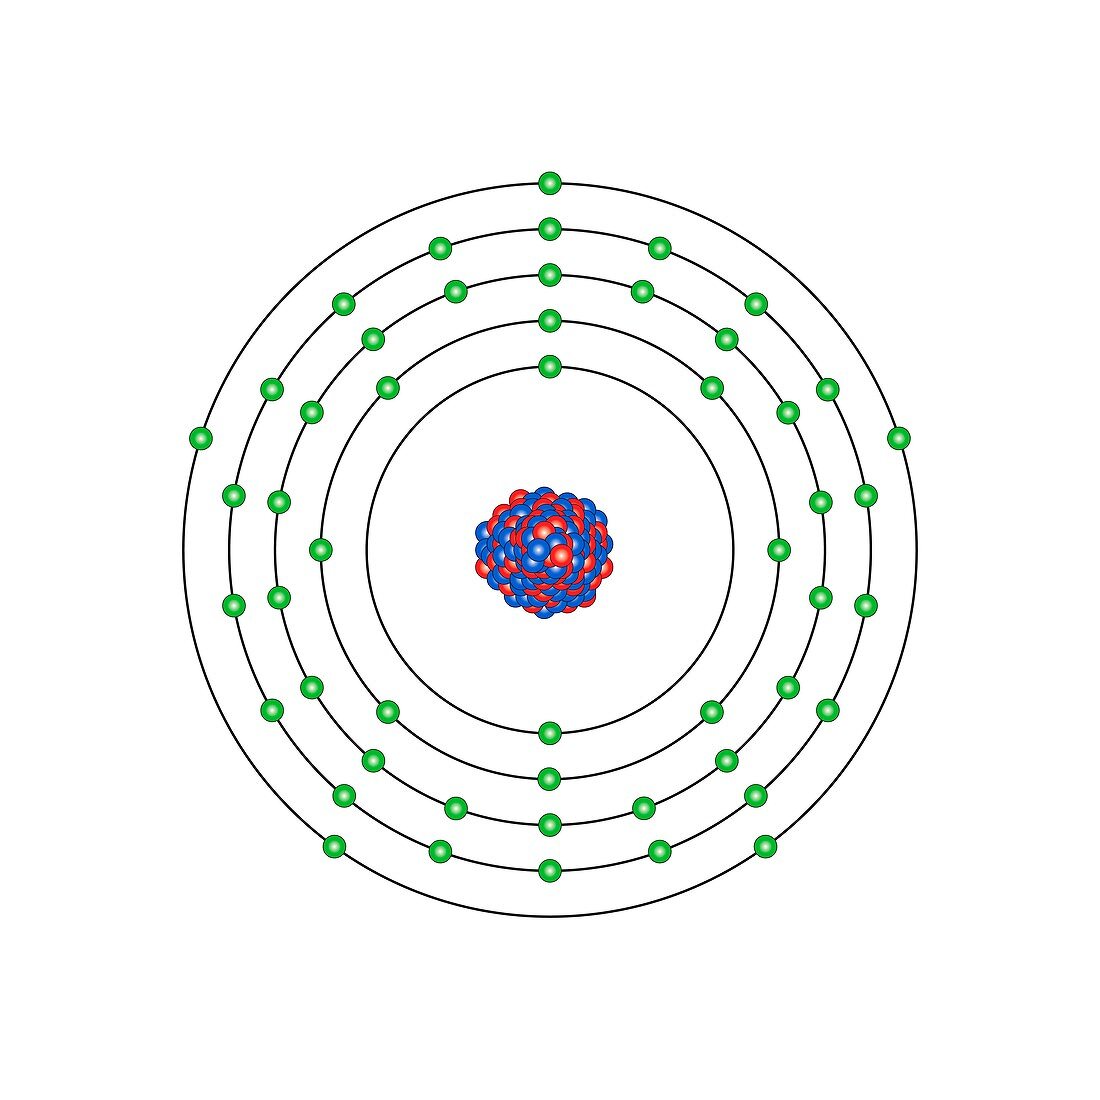 Antimony,atomic structure